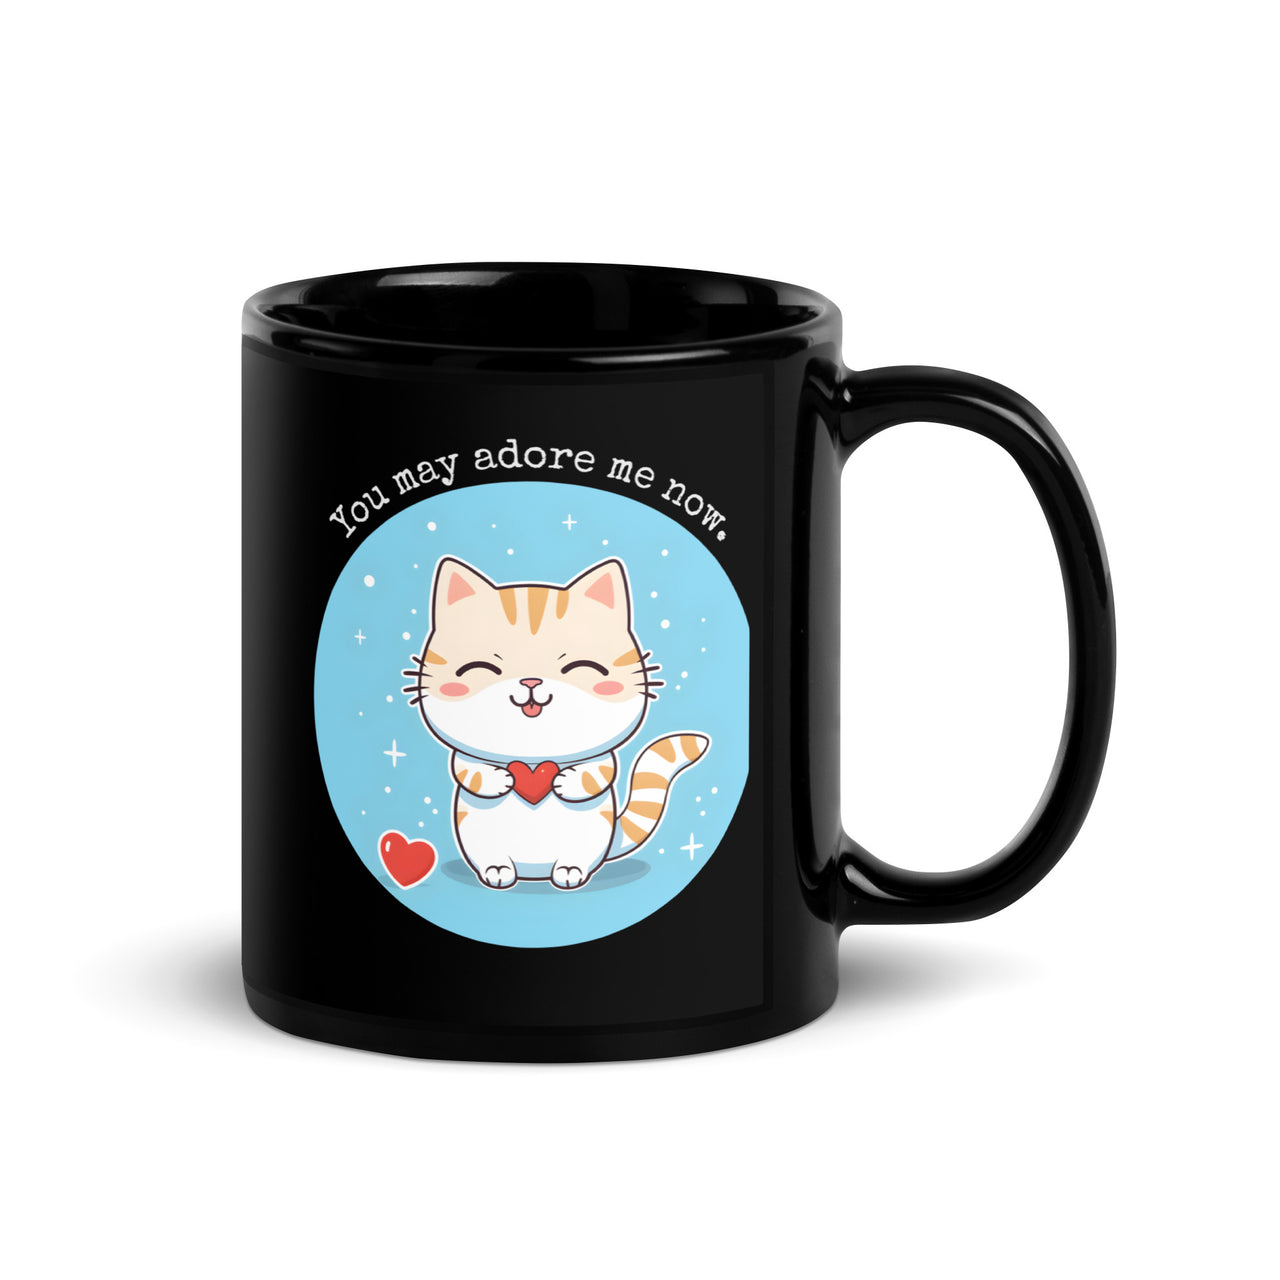 You May Adore Me Now: Cute Cat Love Black Mug